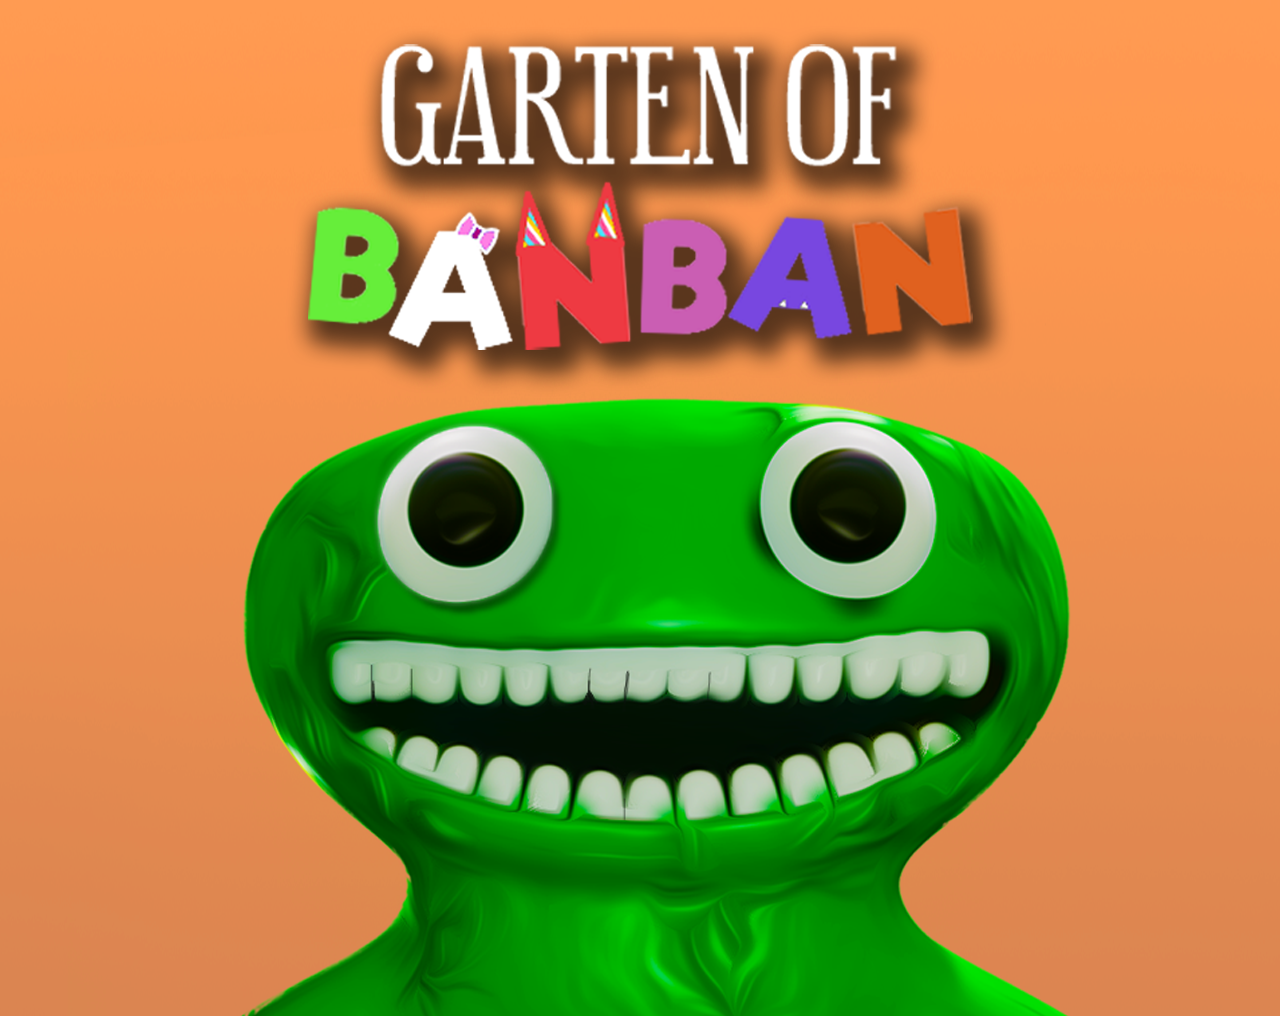 Post by RileyToons in Garten of Banban comments 